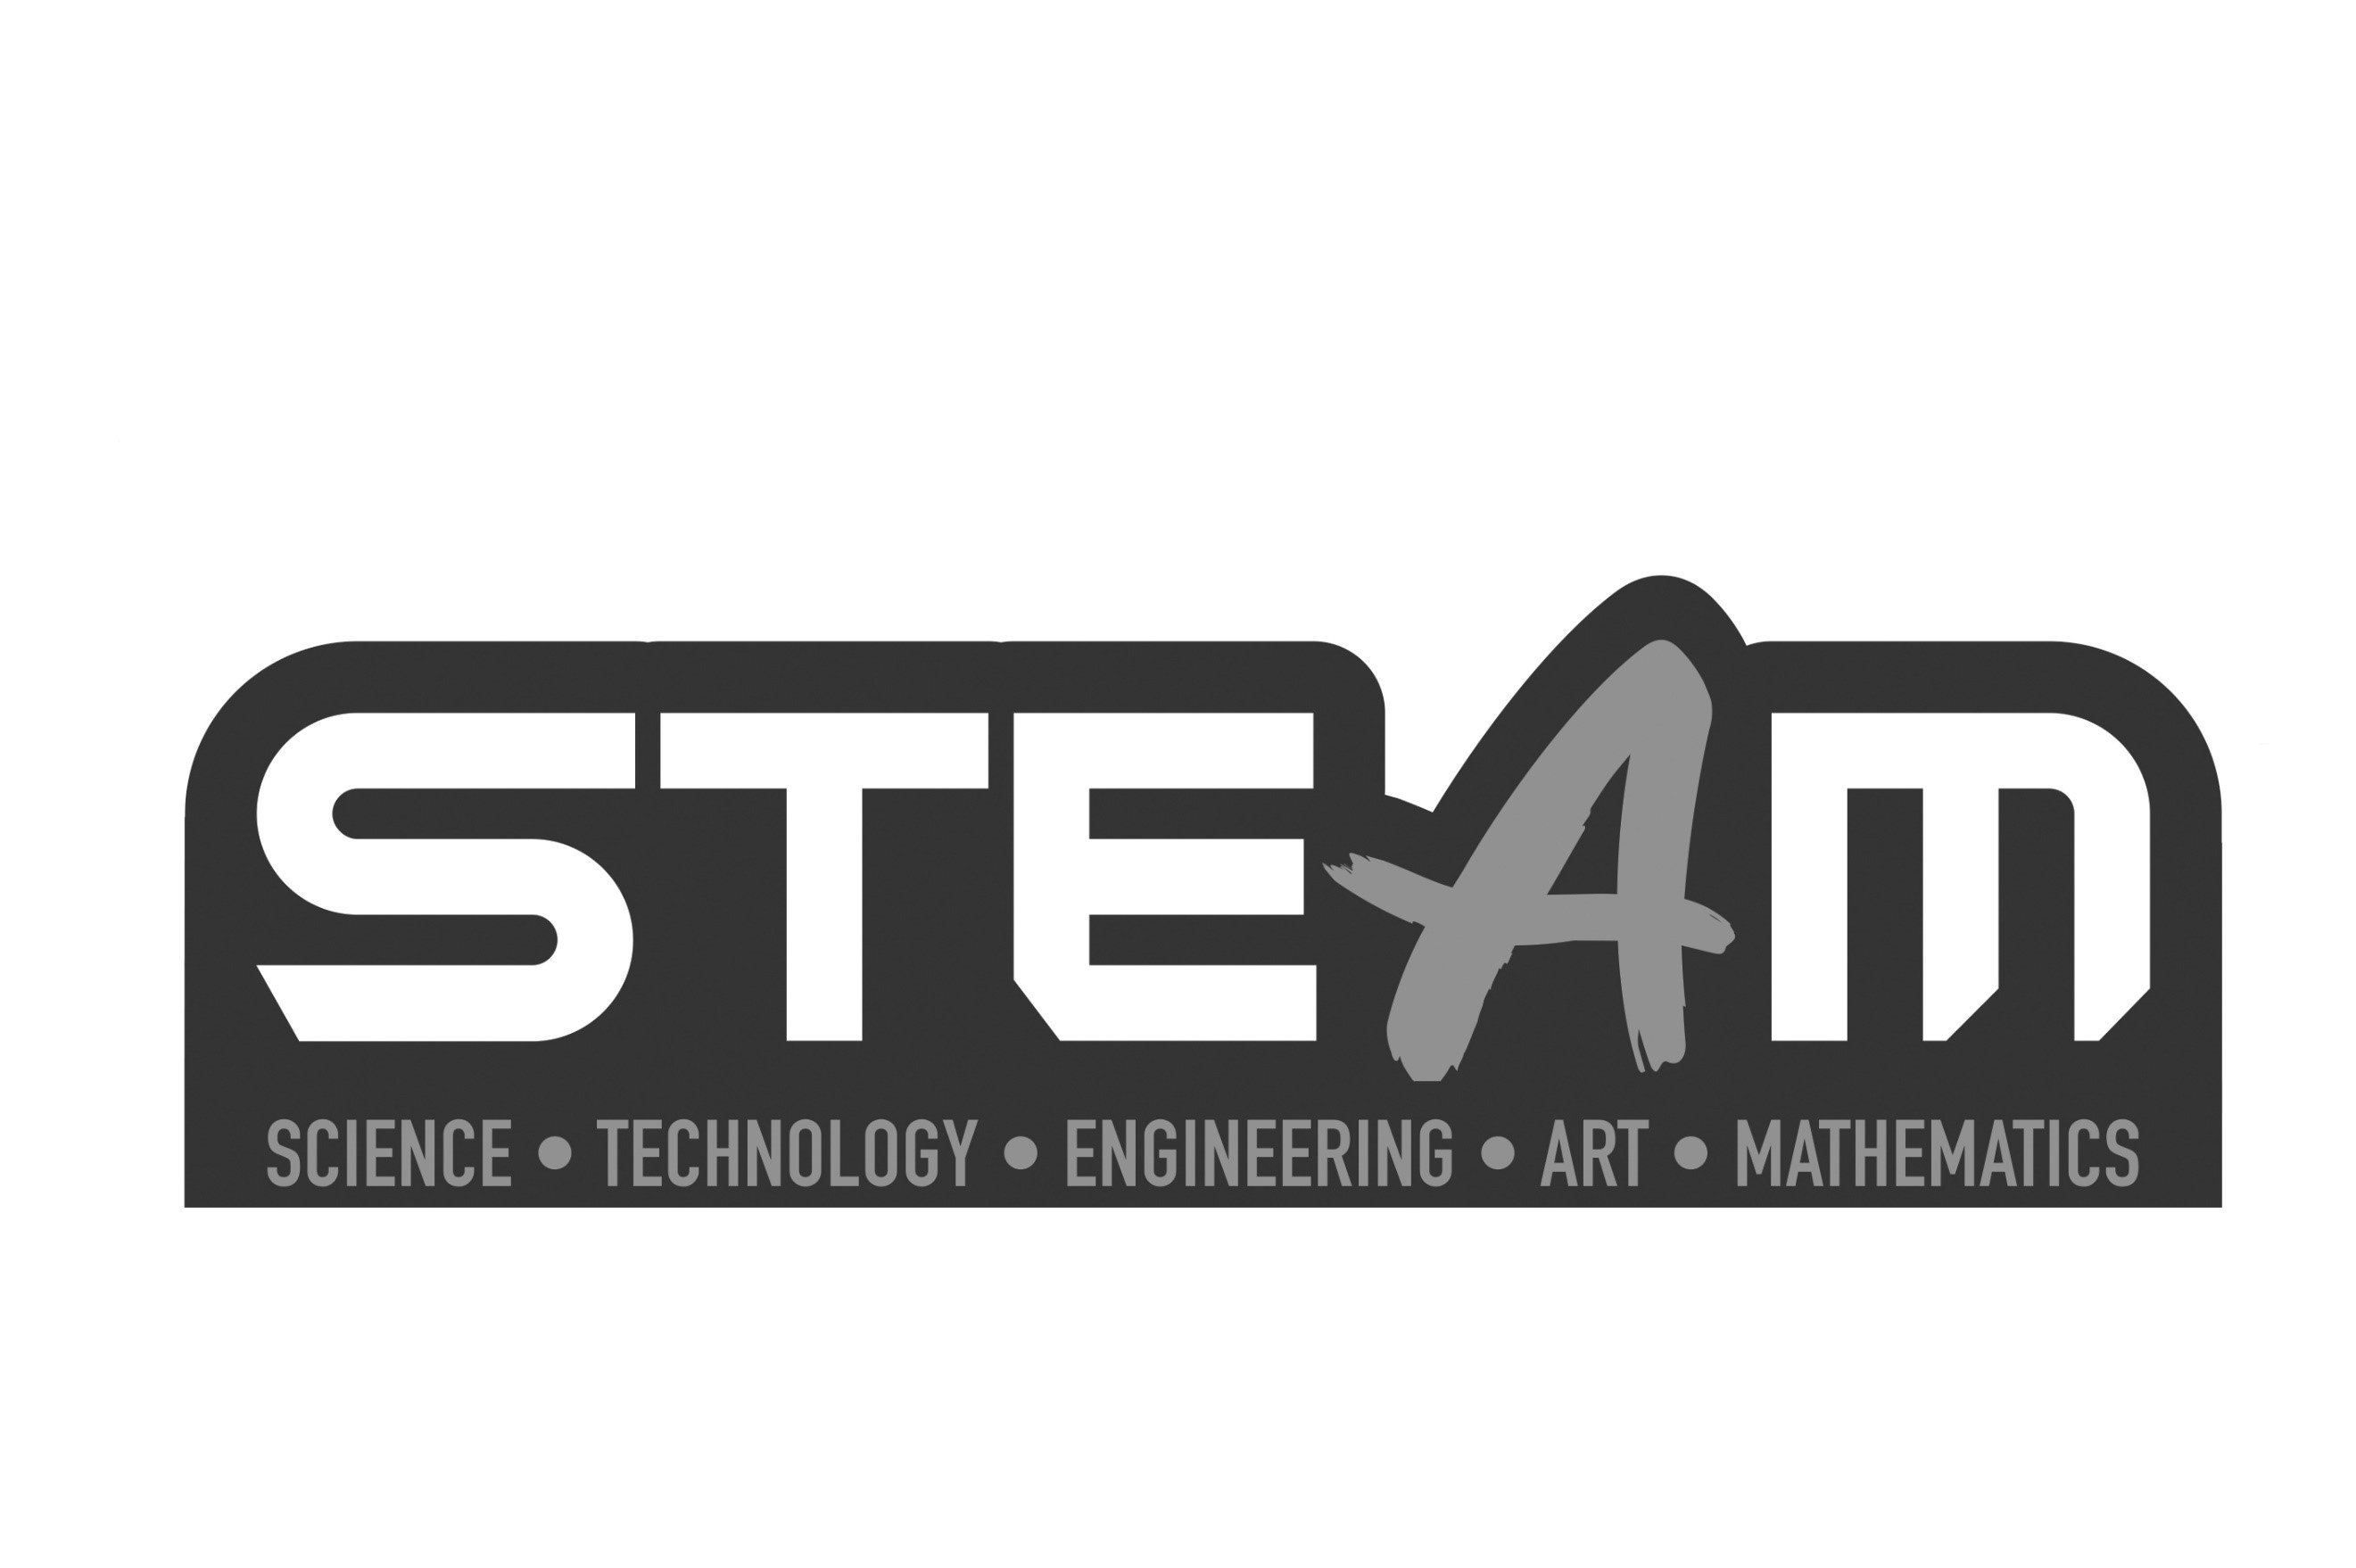  STEAM SCIENCE TECHNOLOGY ENGINEERING ART MATHEMATICS